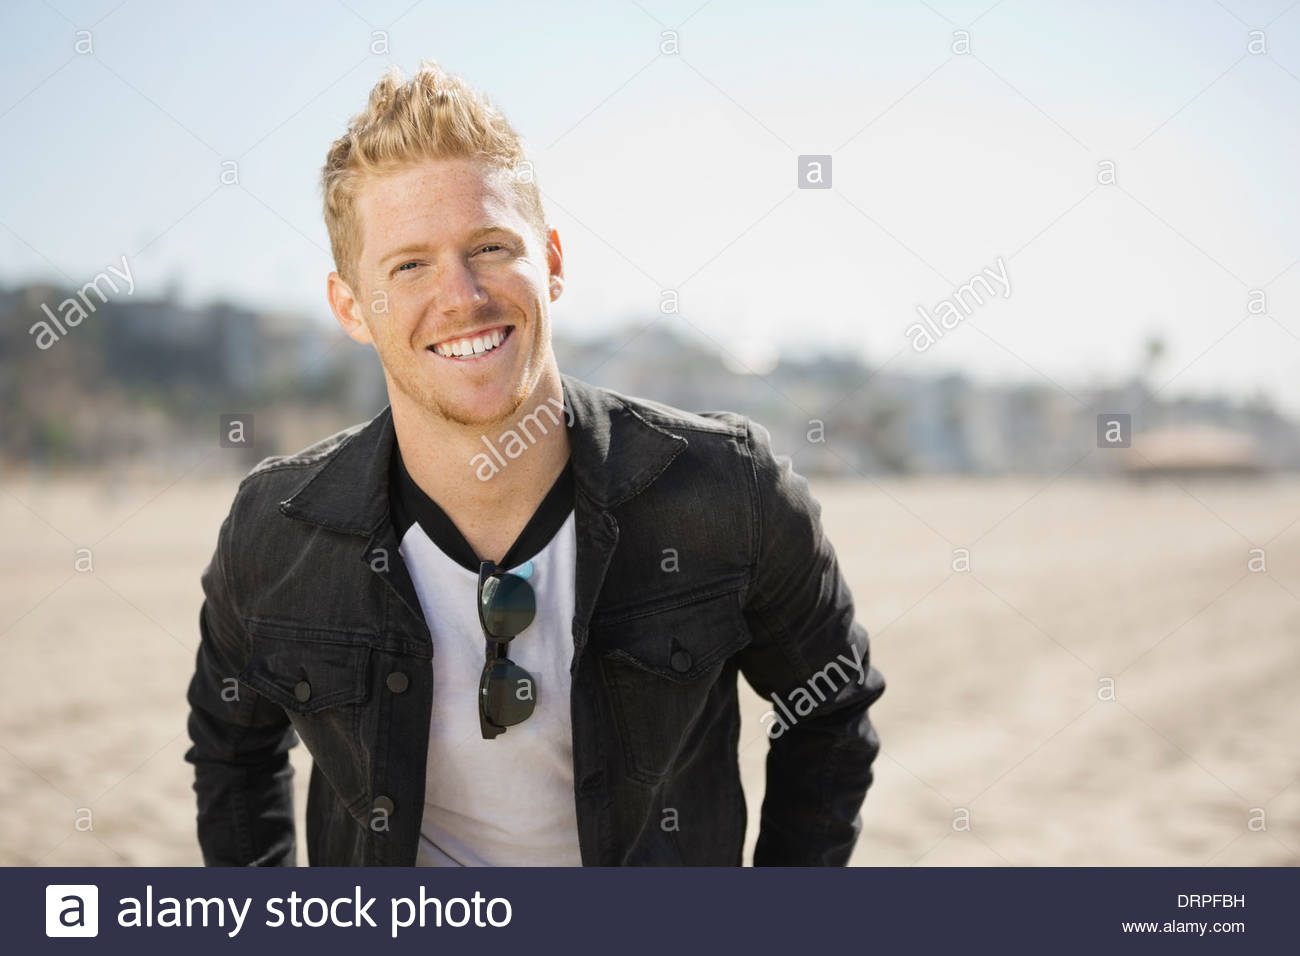 Portrait of fashionable man on beach Stock Photo